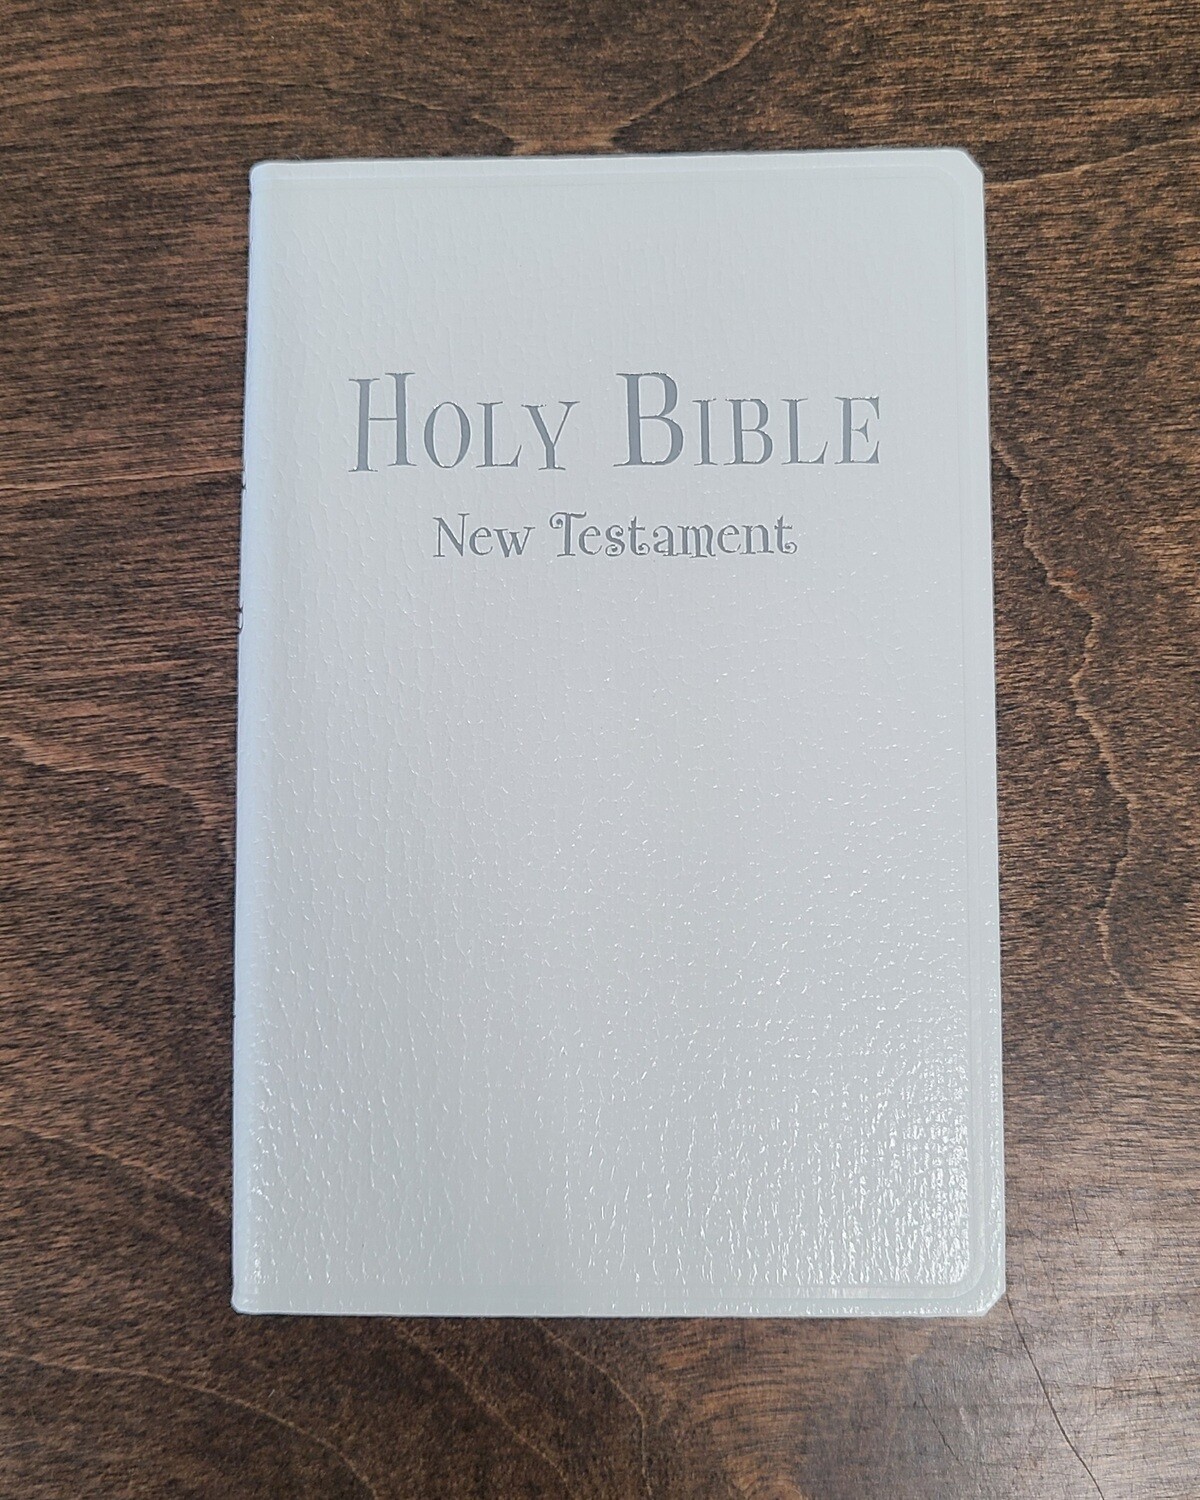 NIV Tiny Testament Holy Bible - White Leather